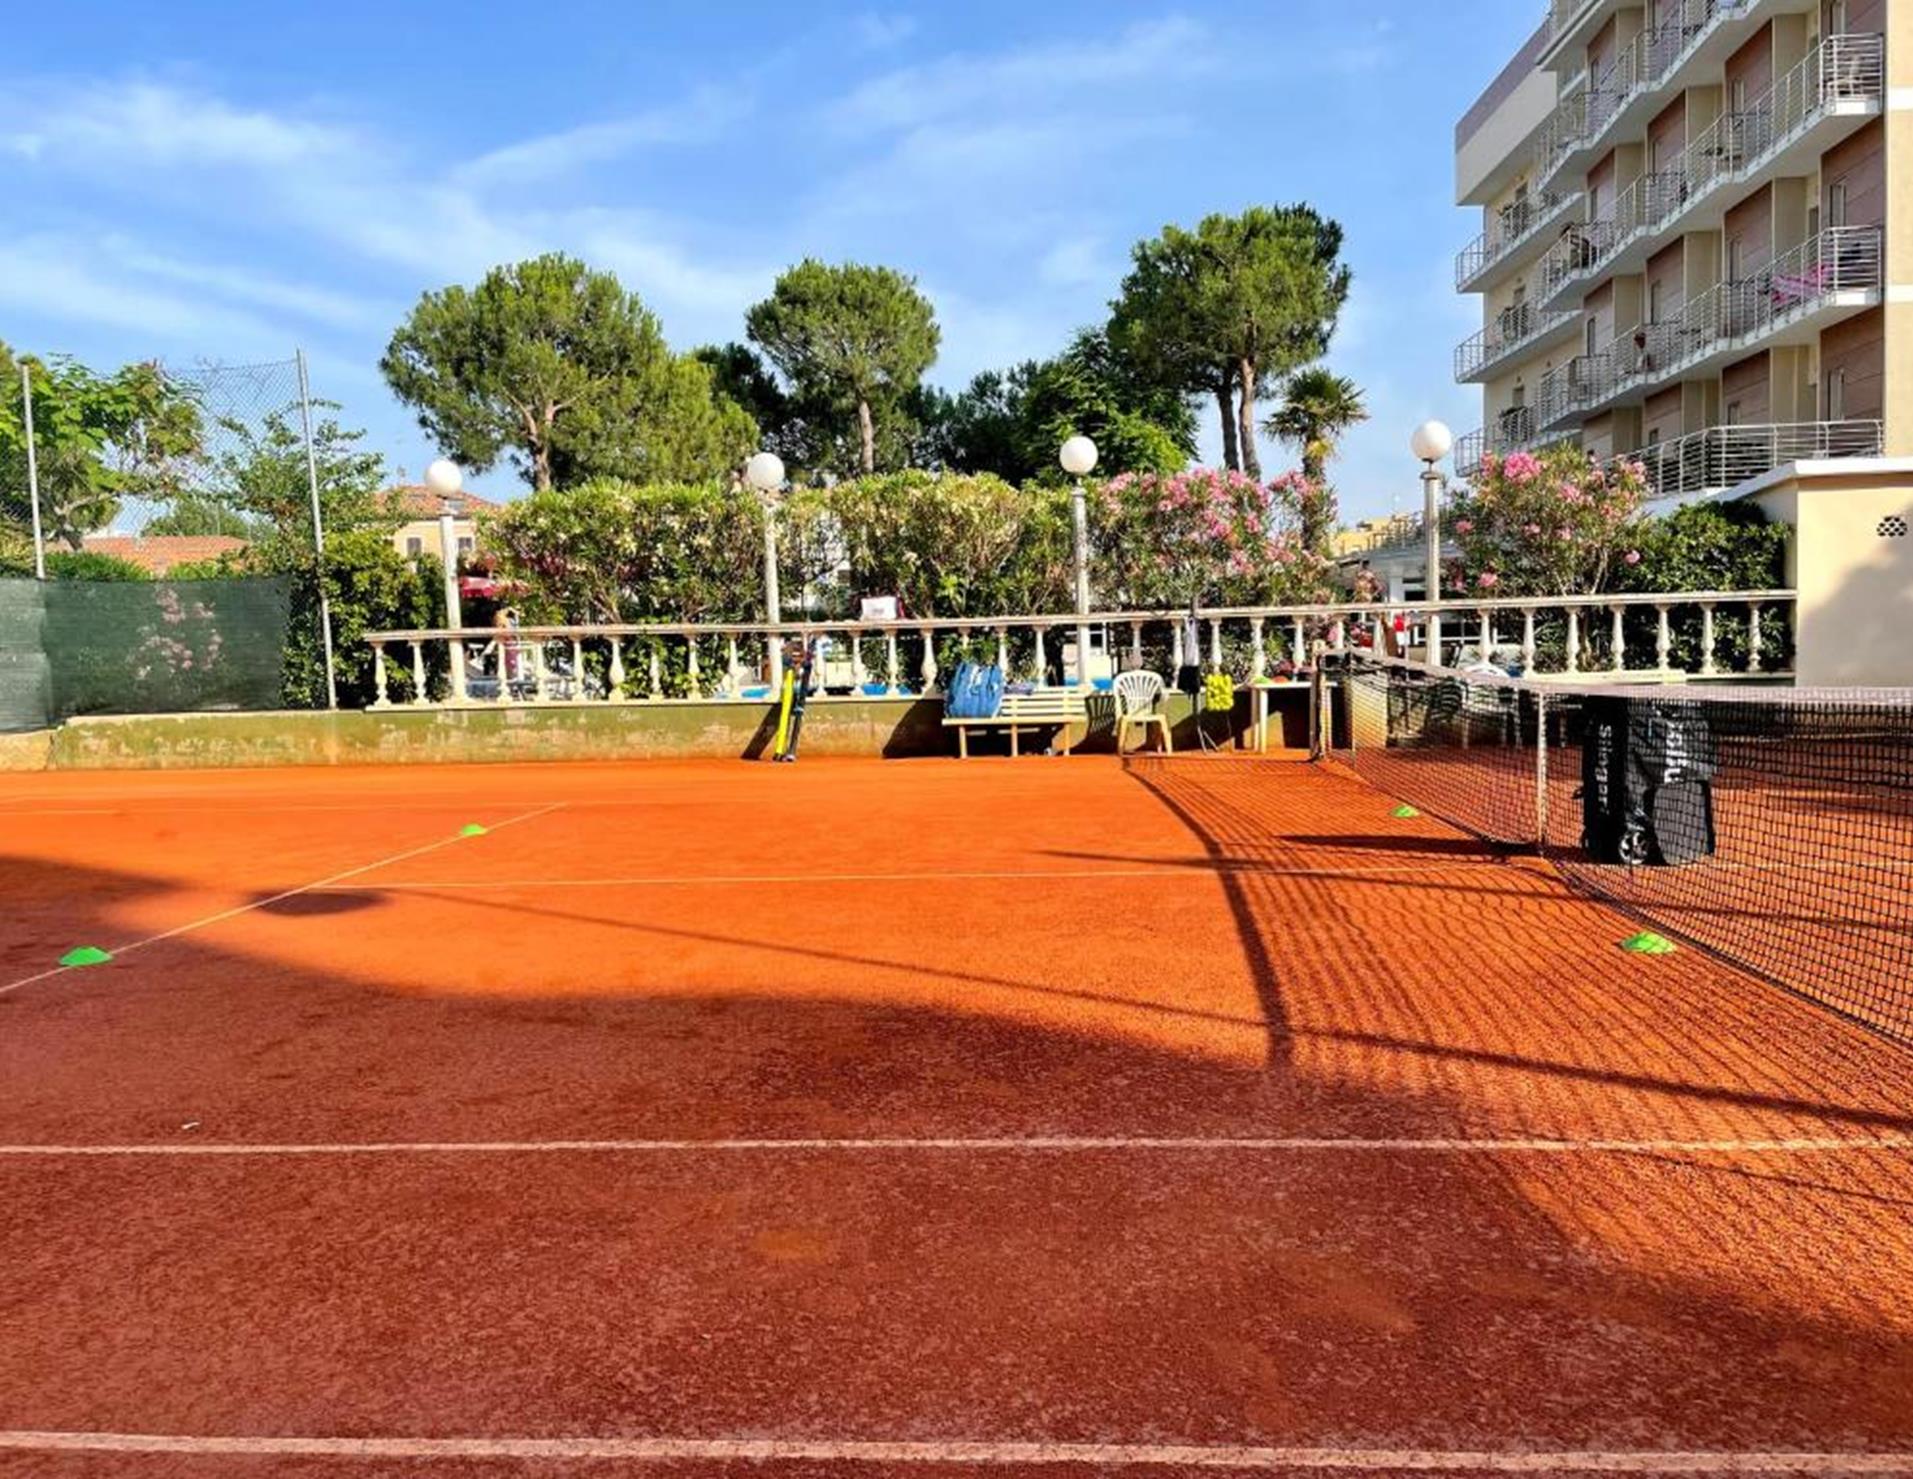 Hotel Franca - Tennis Court